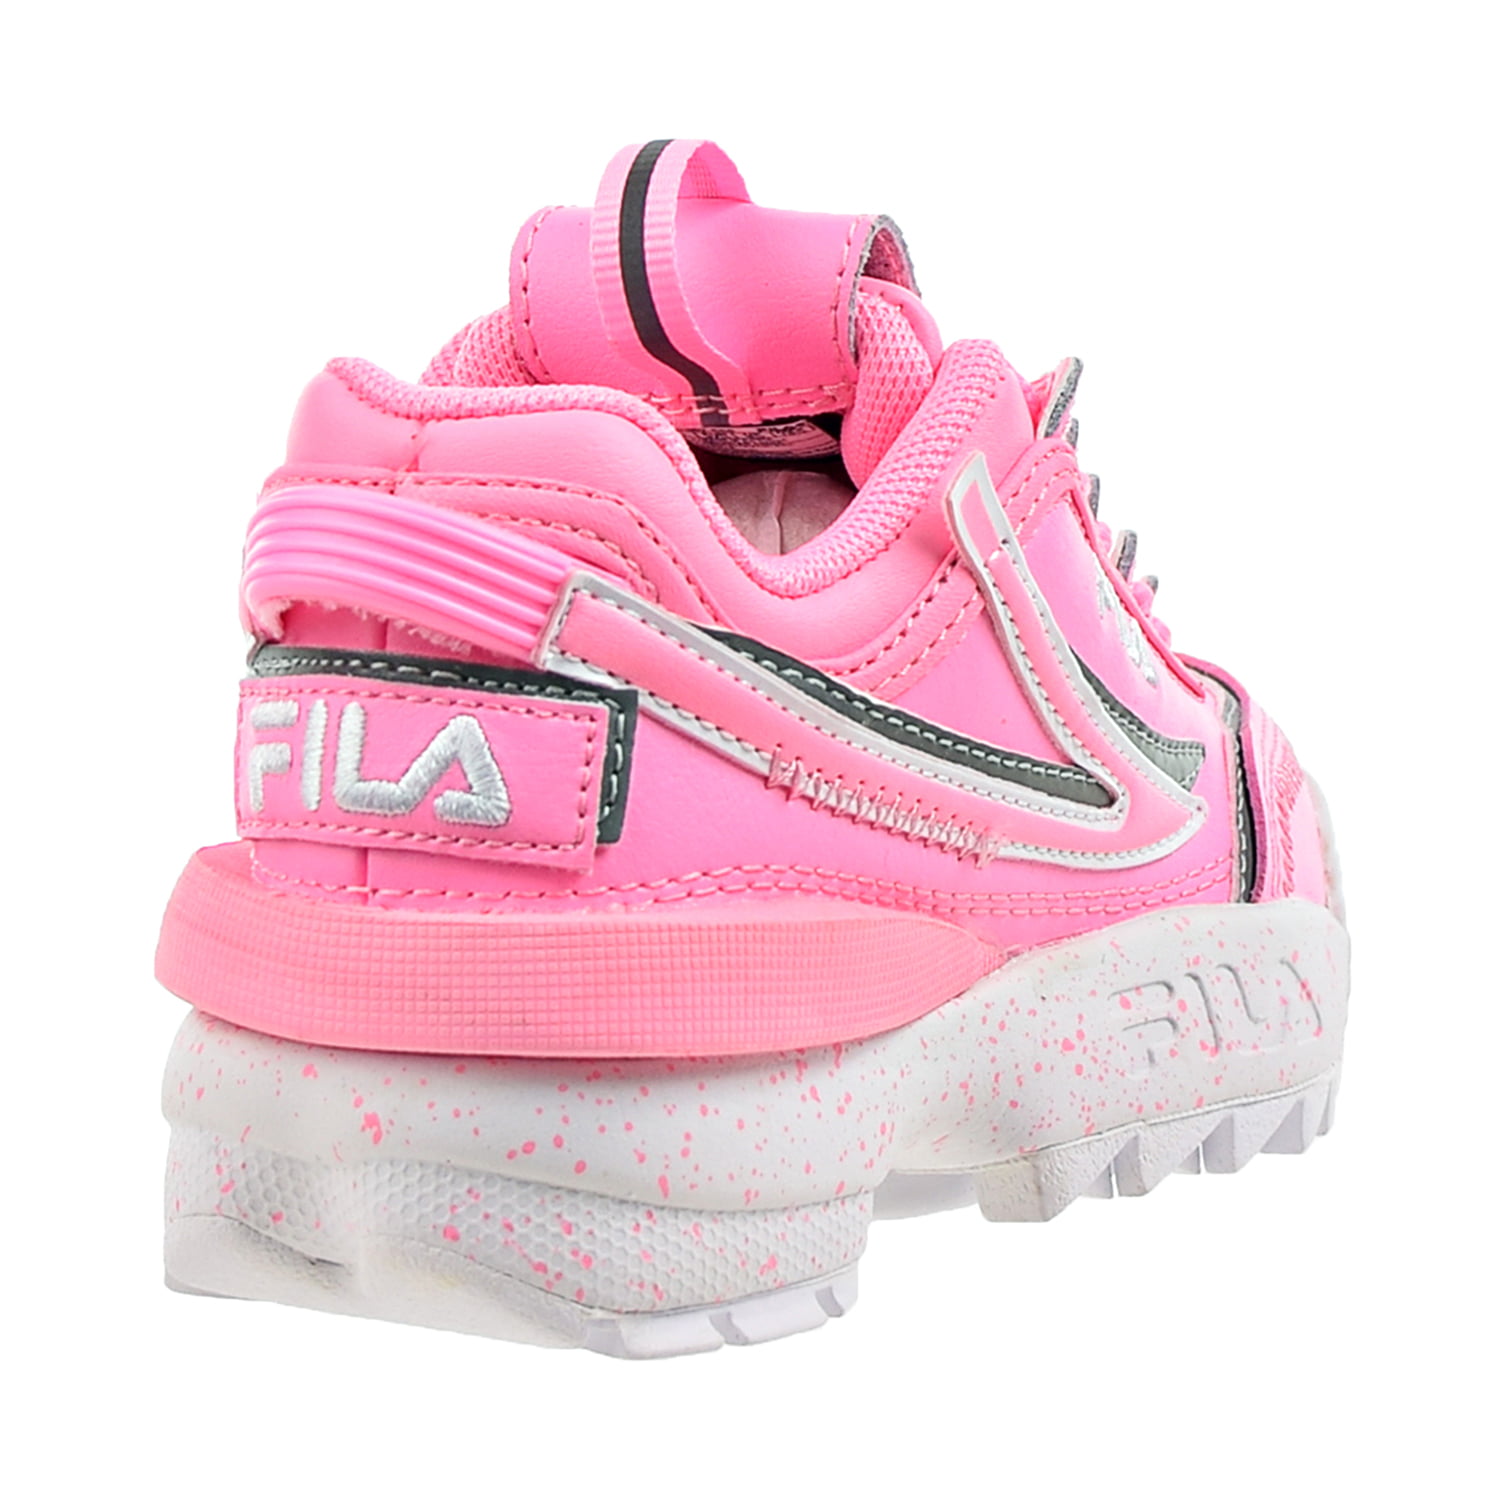 Fila Disruptor II EXP Little Kids' Shoes Pink-White 3xm01562-668